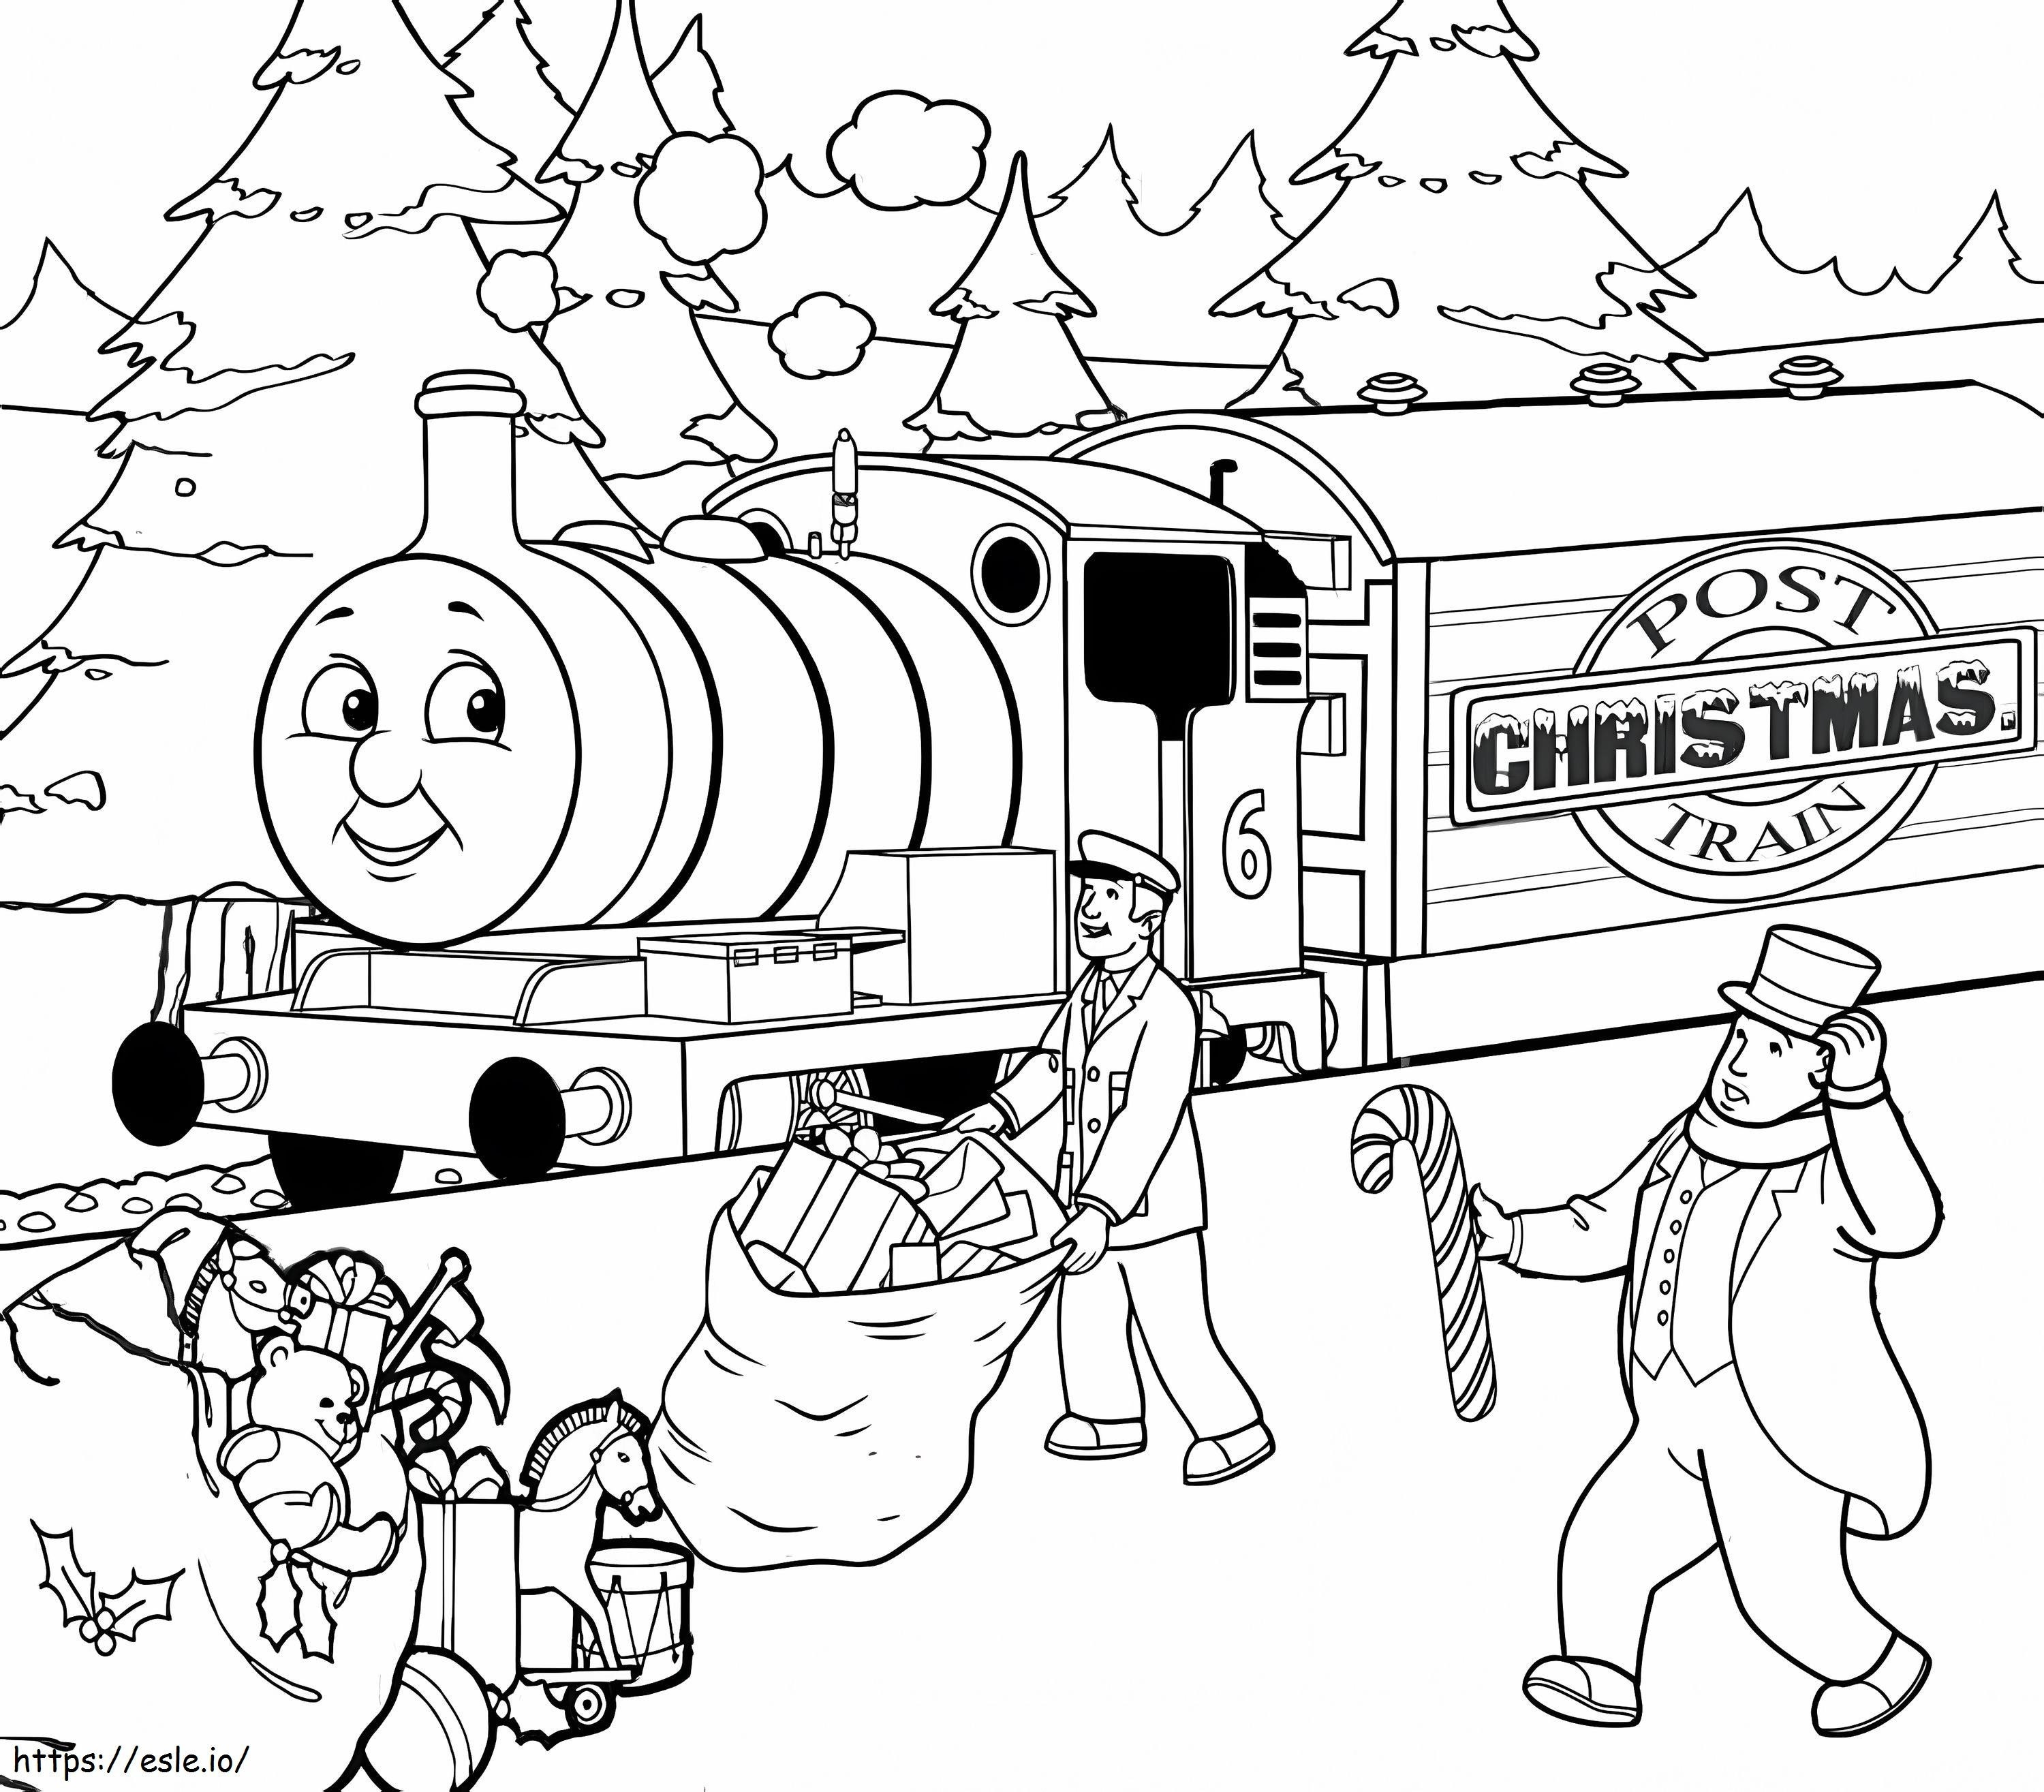 Christmas Thomas The Train coloring page